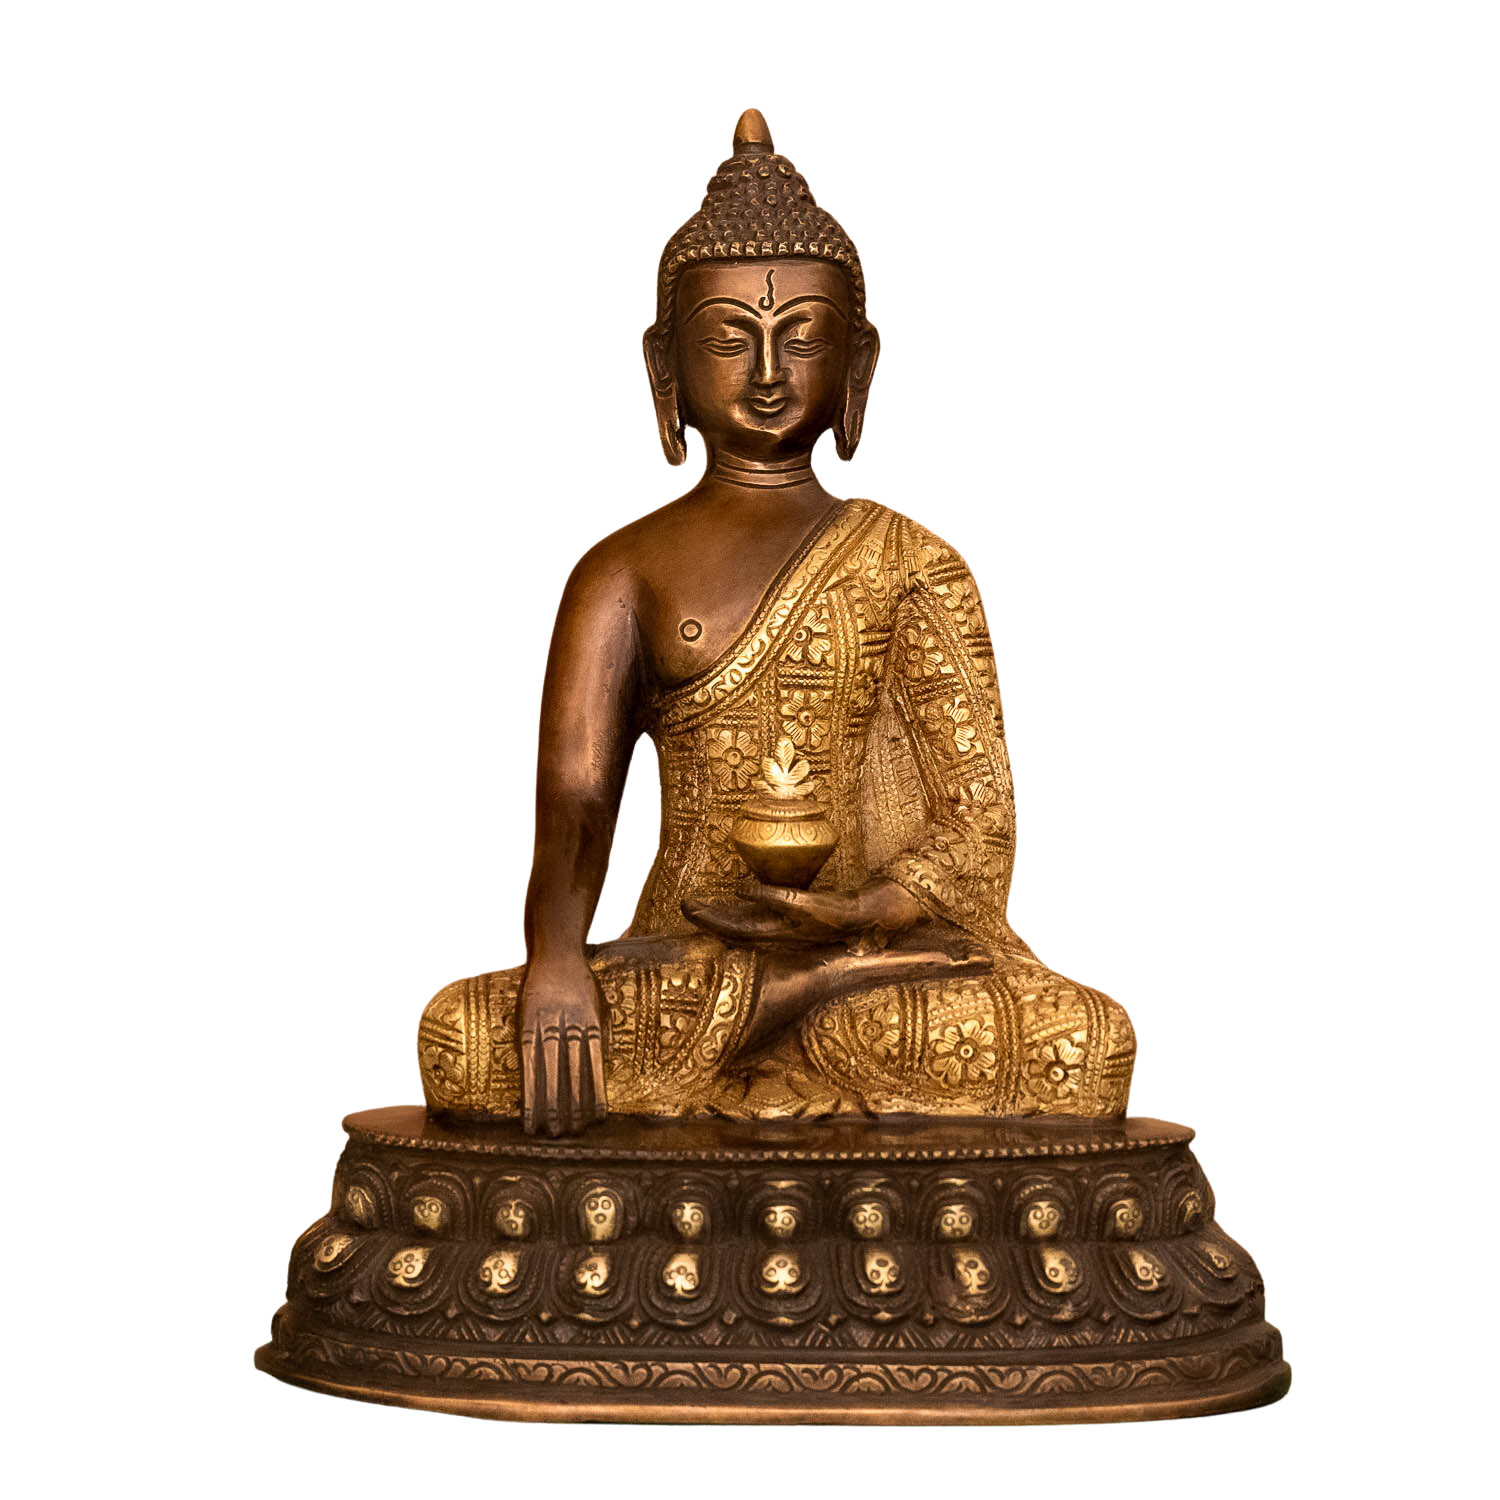 indigenite Brass Buddha Statue | Size - (9 x 5 x 11) Inches, Weight: 4 kgs